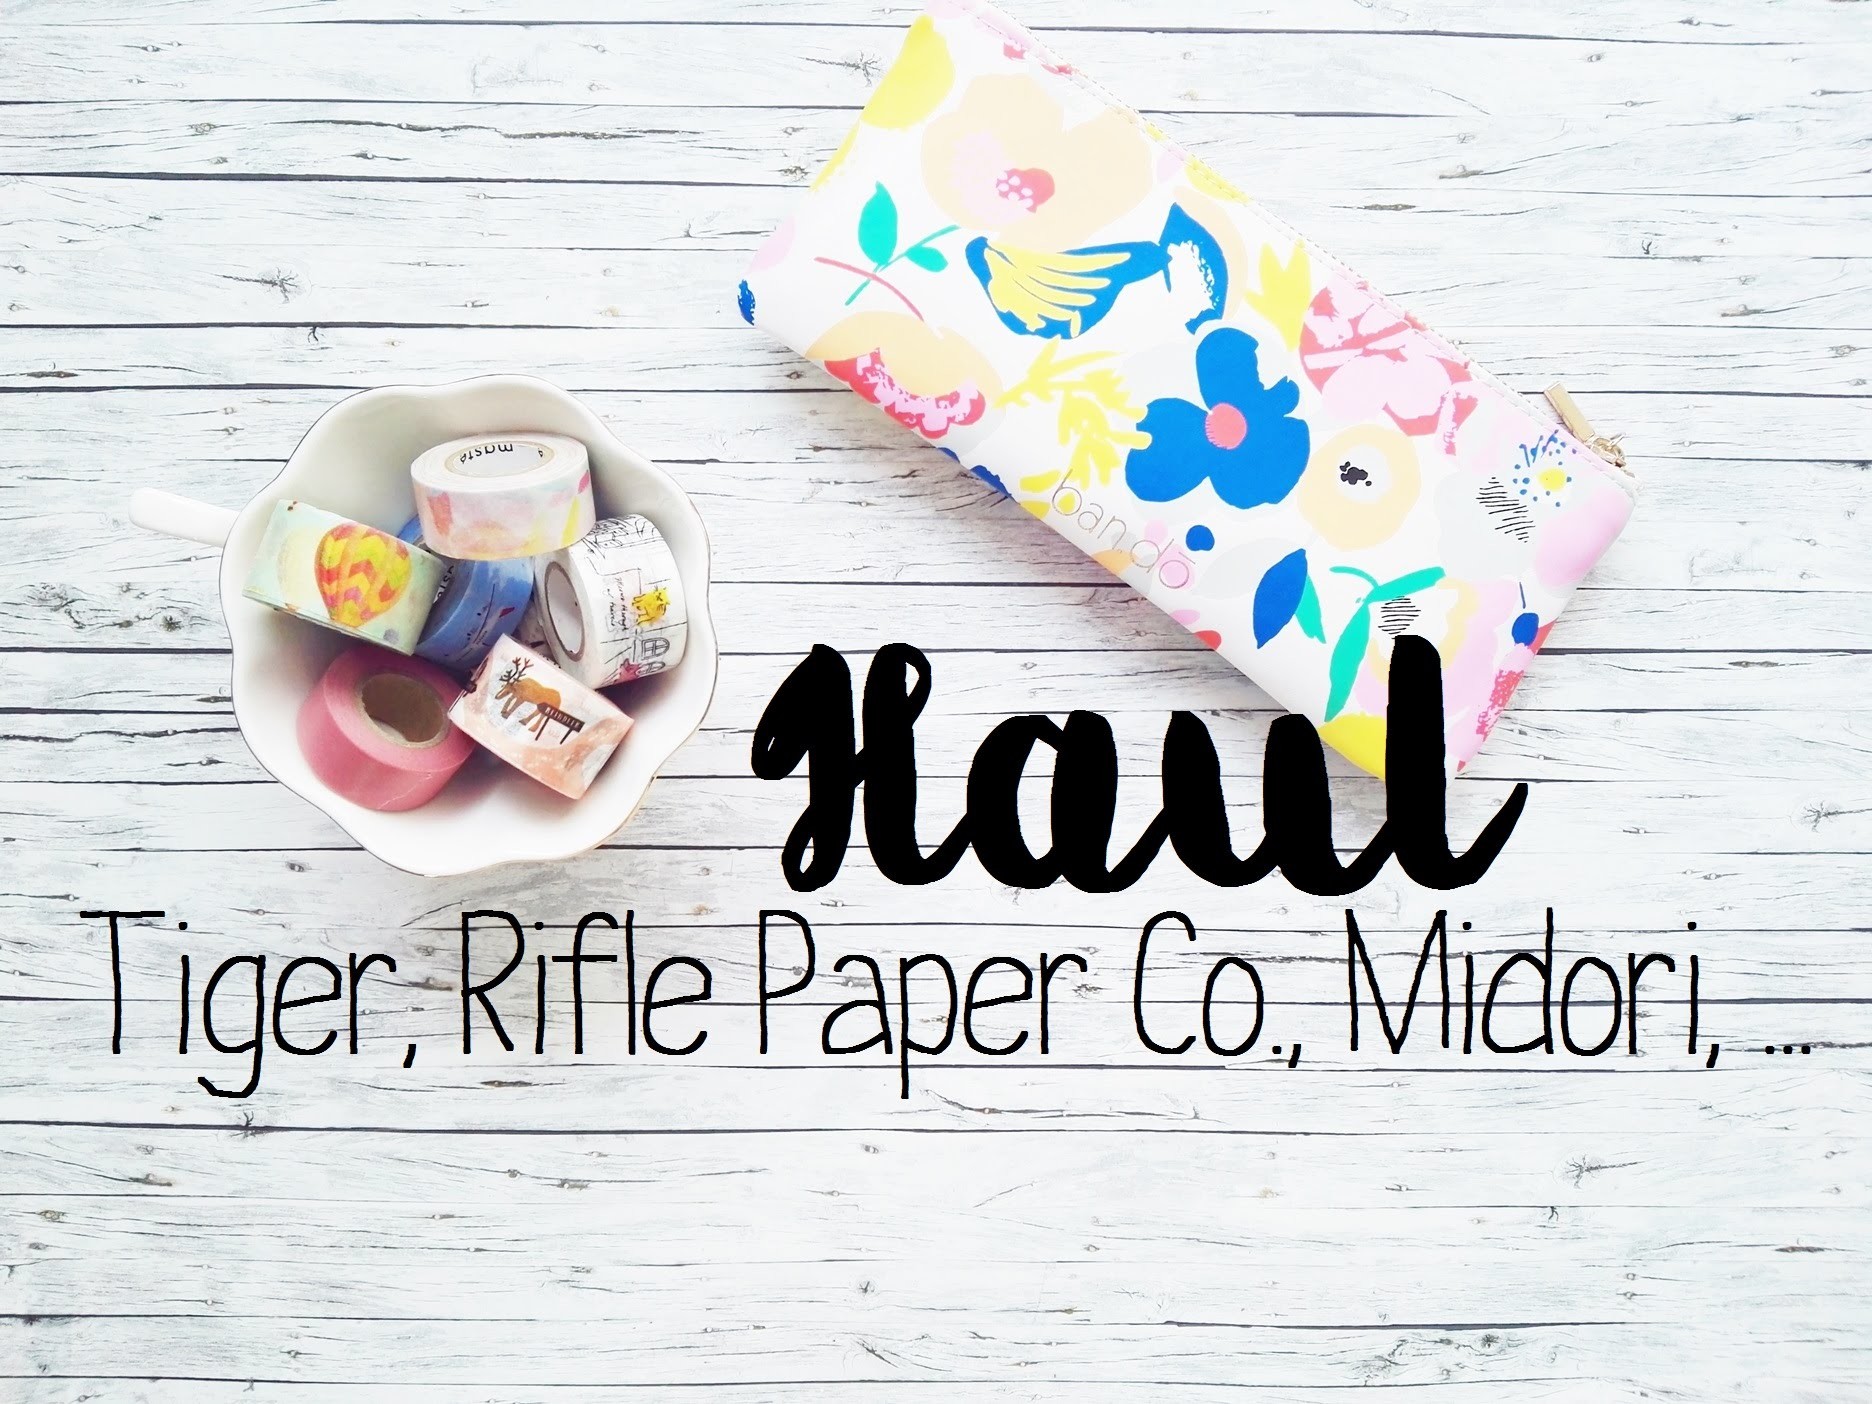 Stationery Haul | Tiger, Rifle Paper Co., Midori, Masté,. 